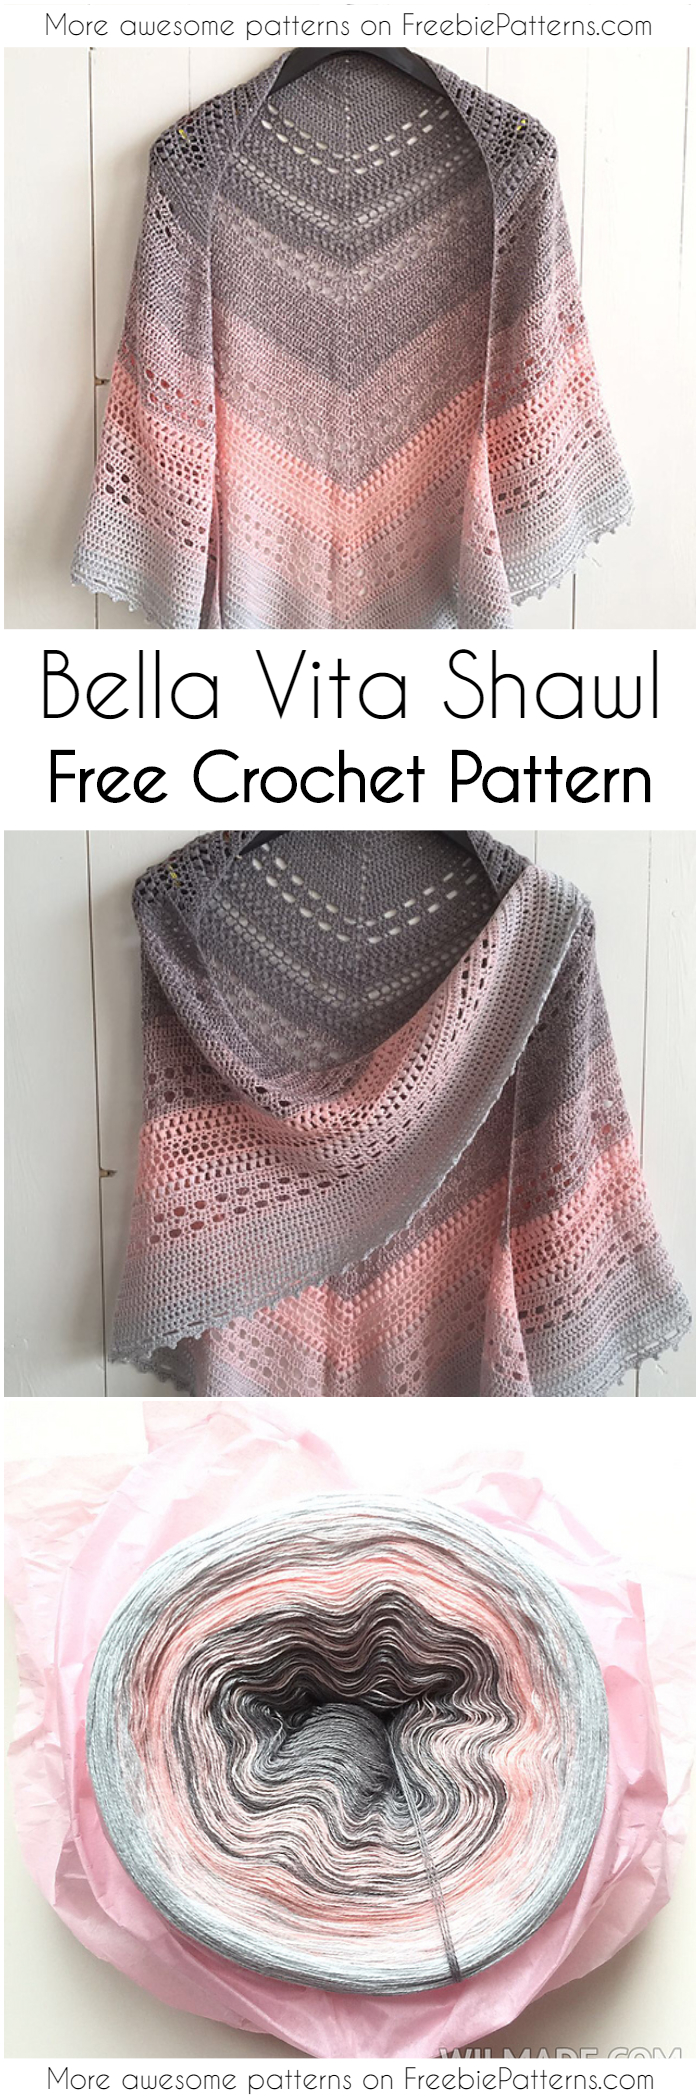 Bella Vita Shawl Free Crochet Pattern